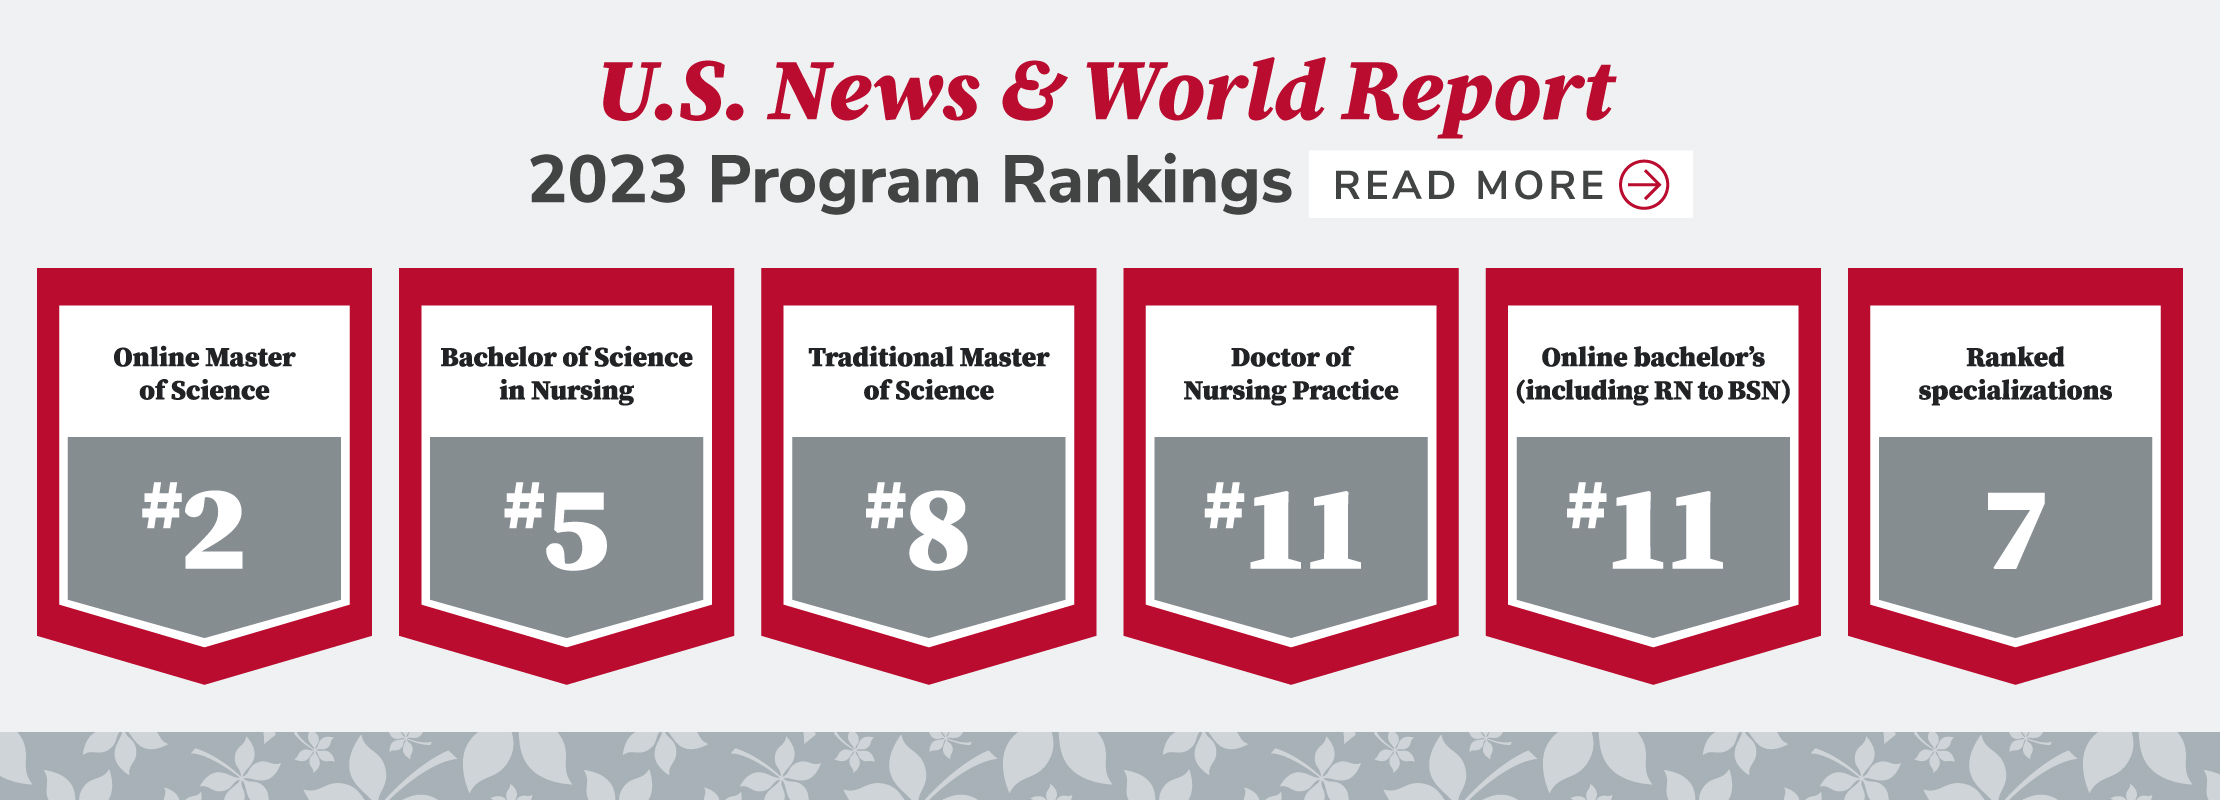 U.S. News & World Report 2023 Program Rankings